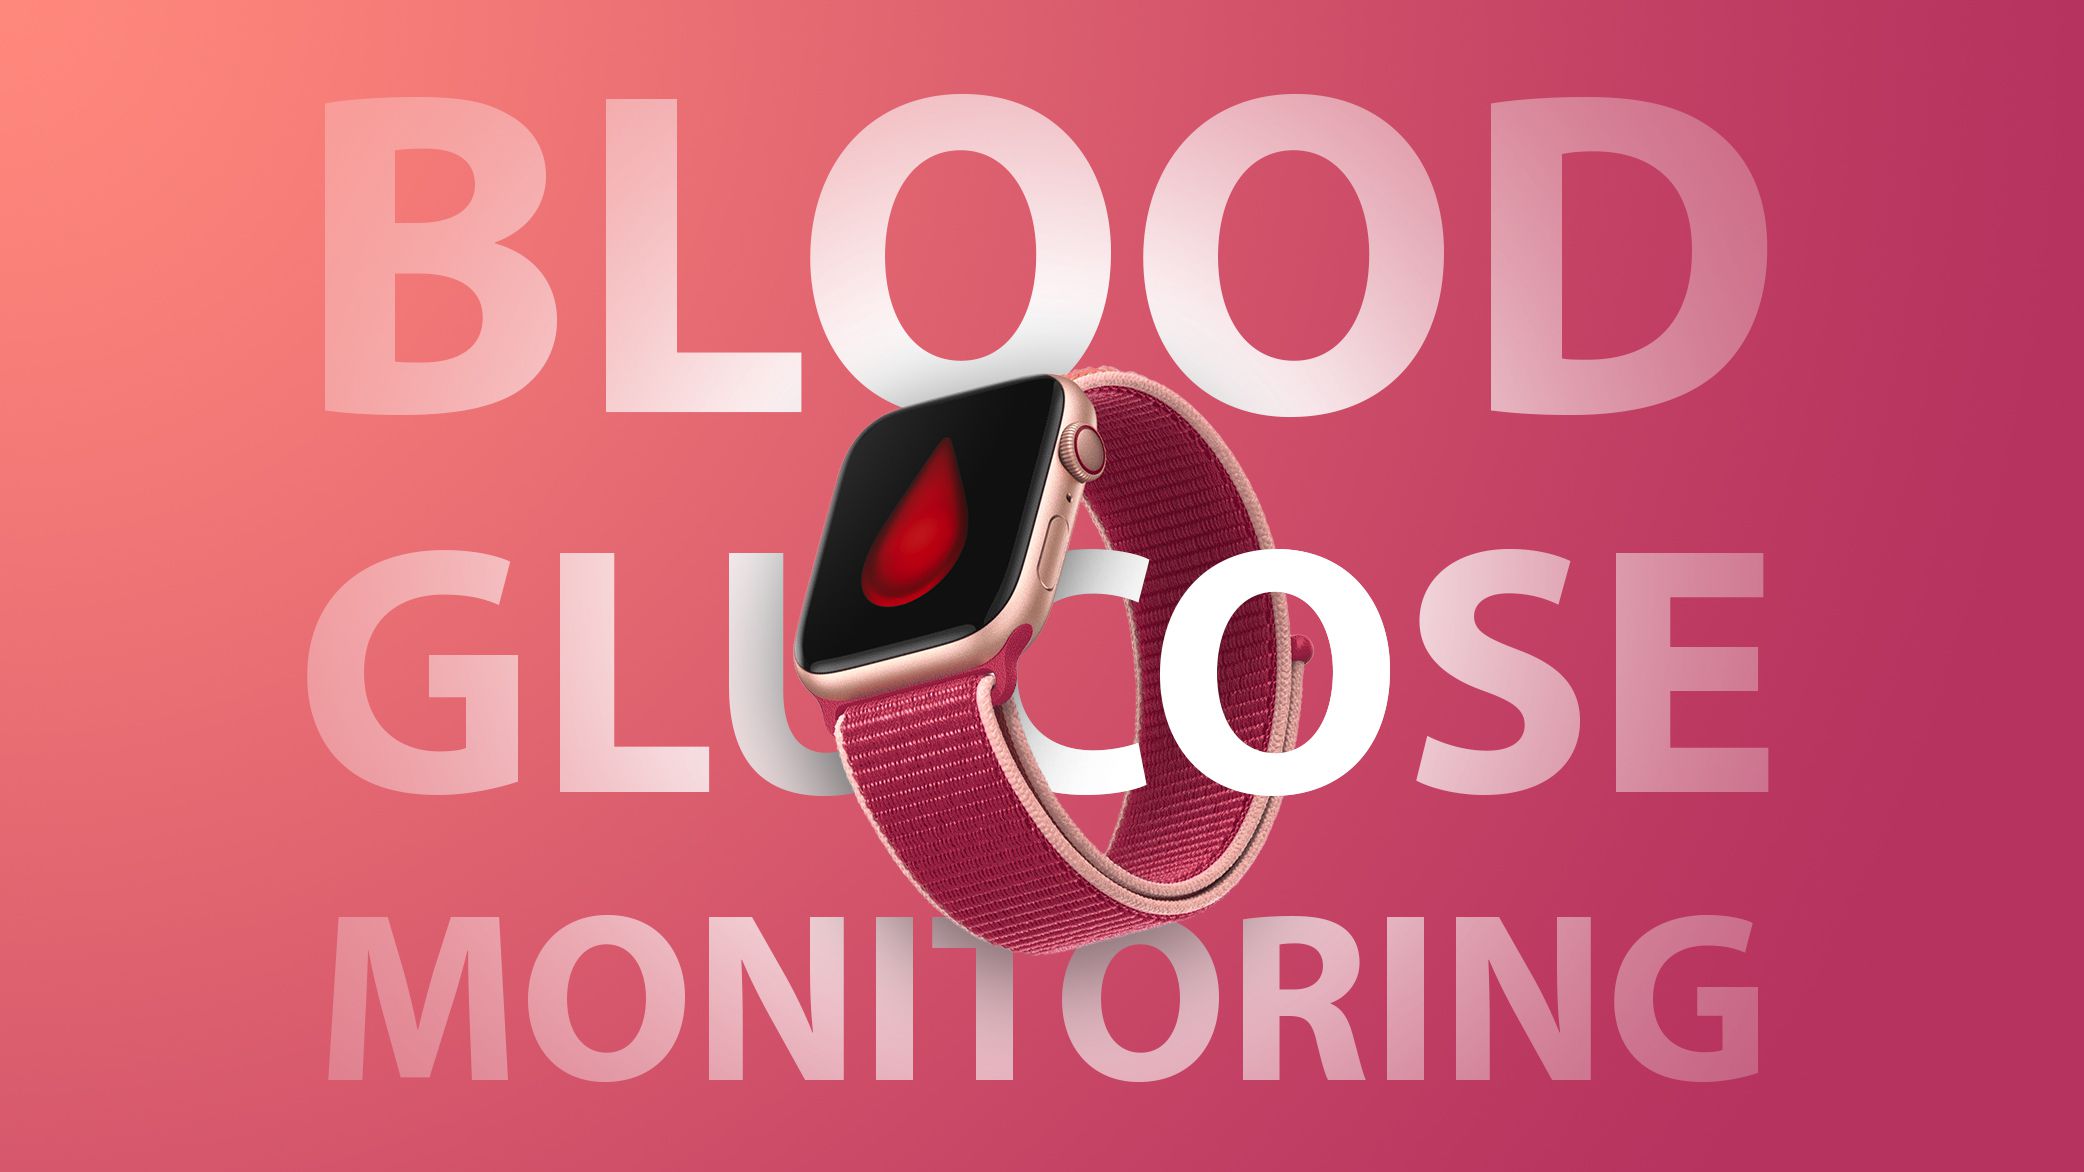 https://images.macrumors.com/t/85u-Sehiagnp7Ujw6m-04EBzPE4=/2084x/article-new/2021/01/apple-watch-blood-glucose-feature.jpg